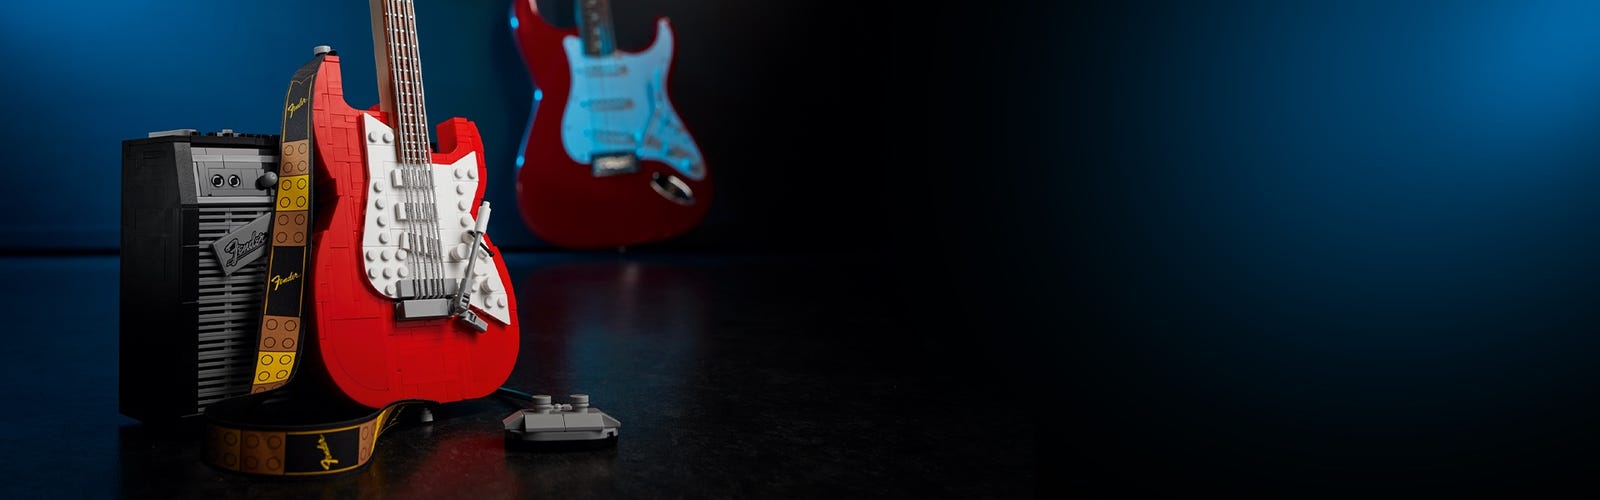 LEGO IDEAS - Explorer-Style Rock Electric Guitar